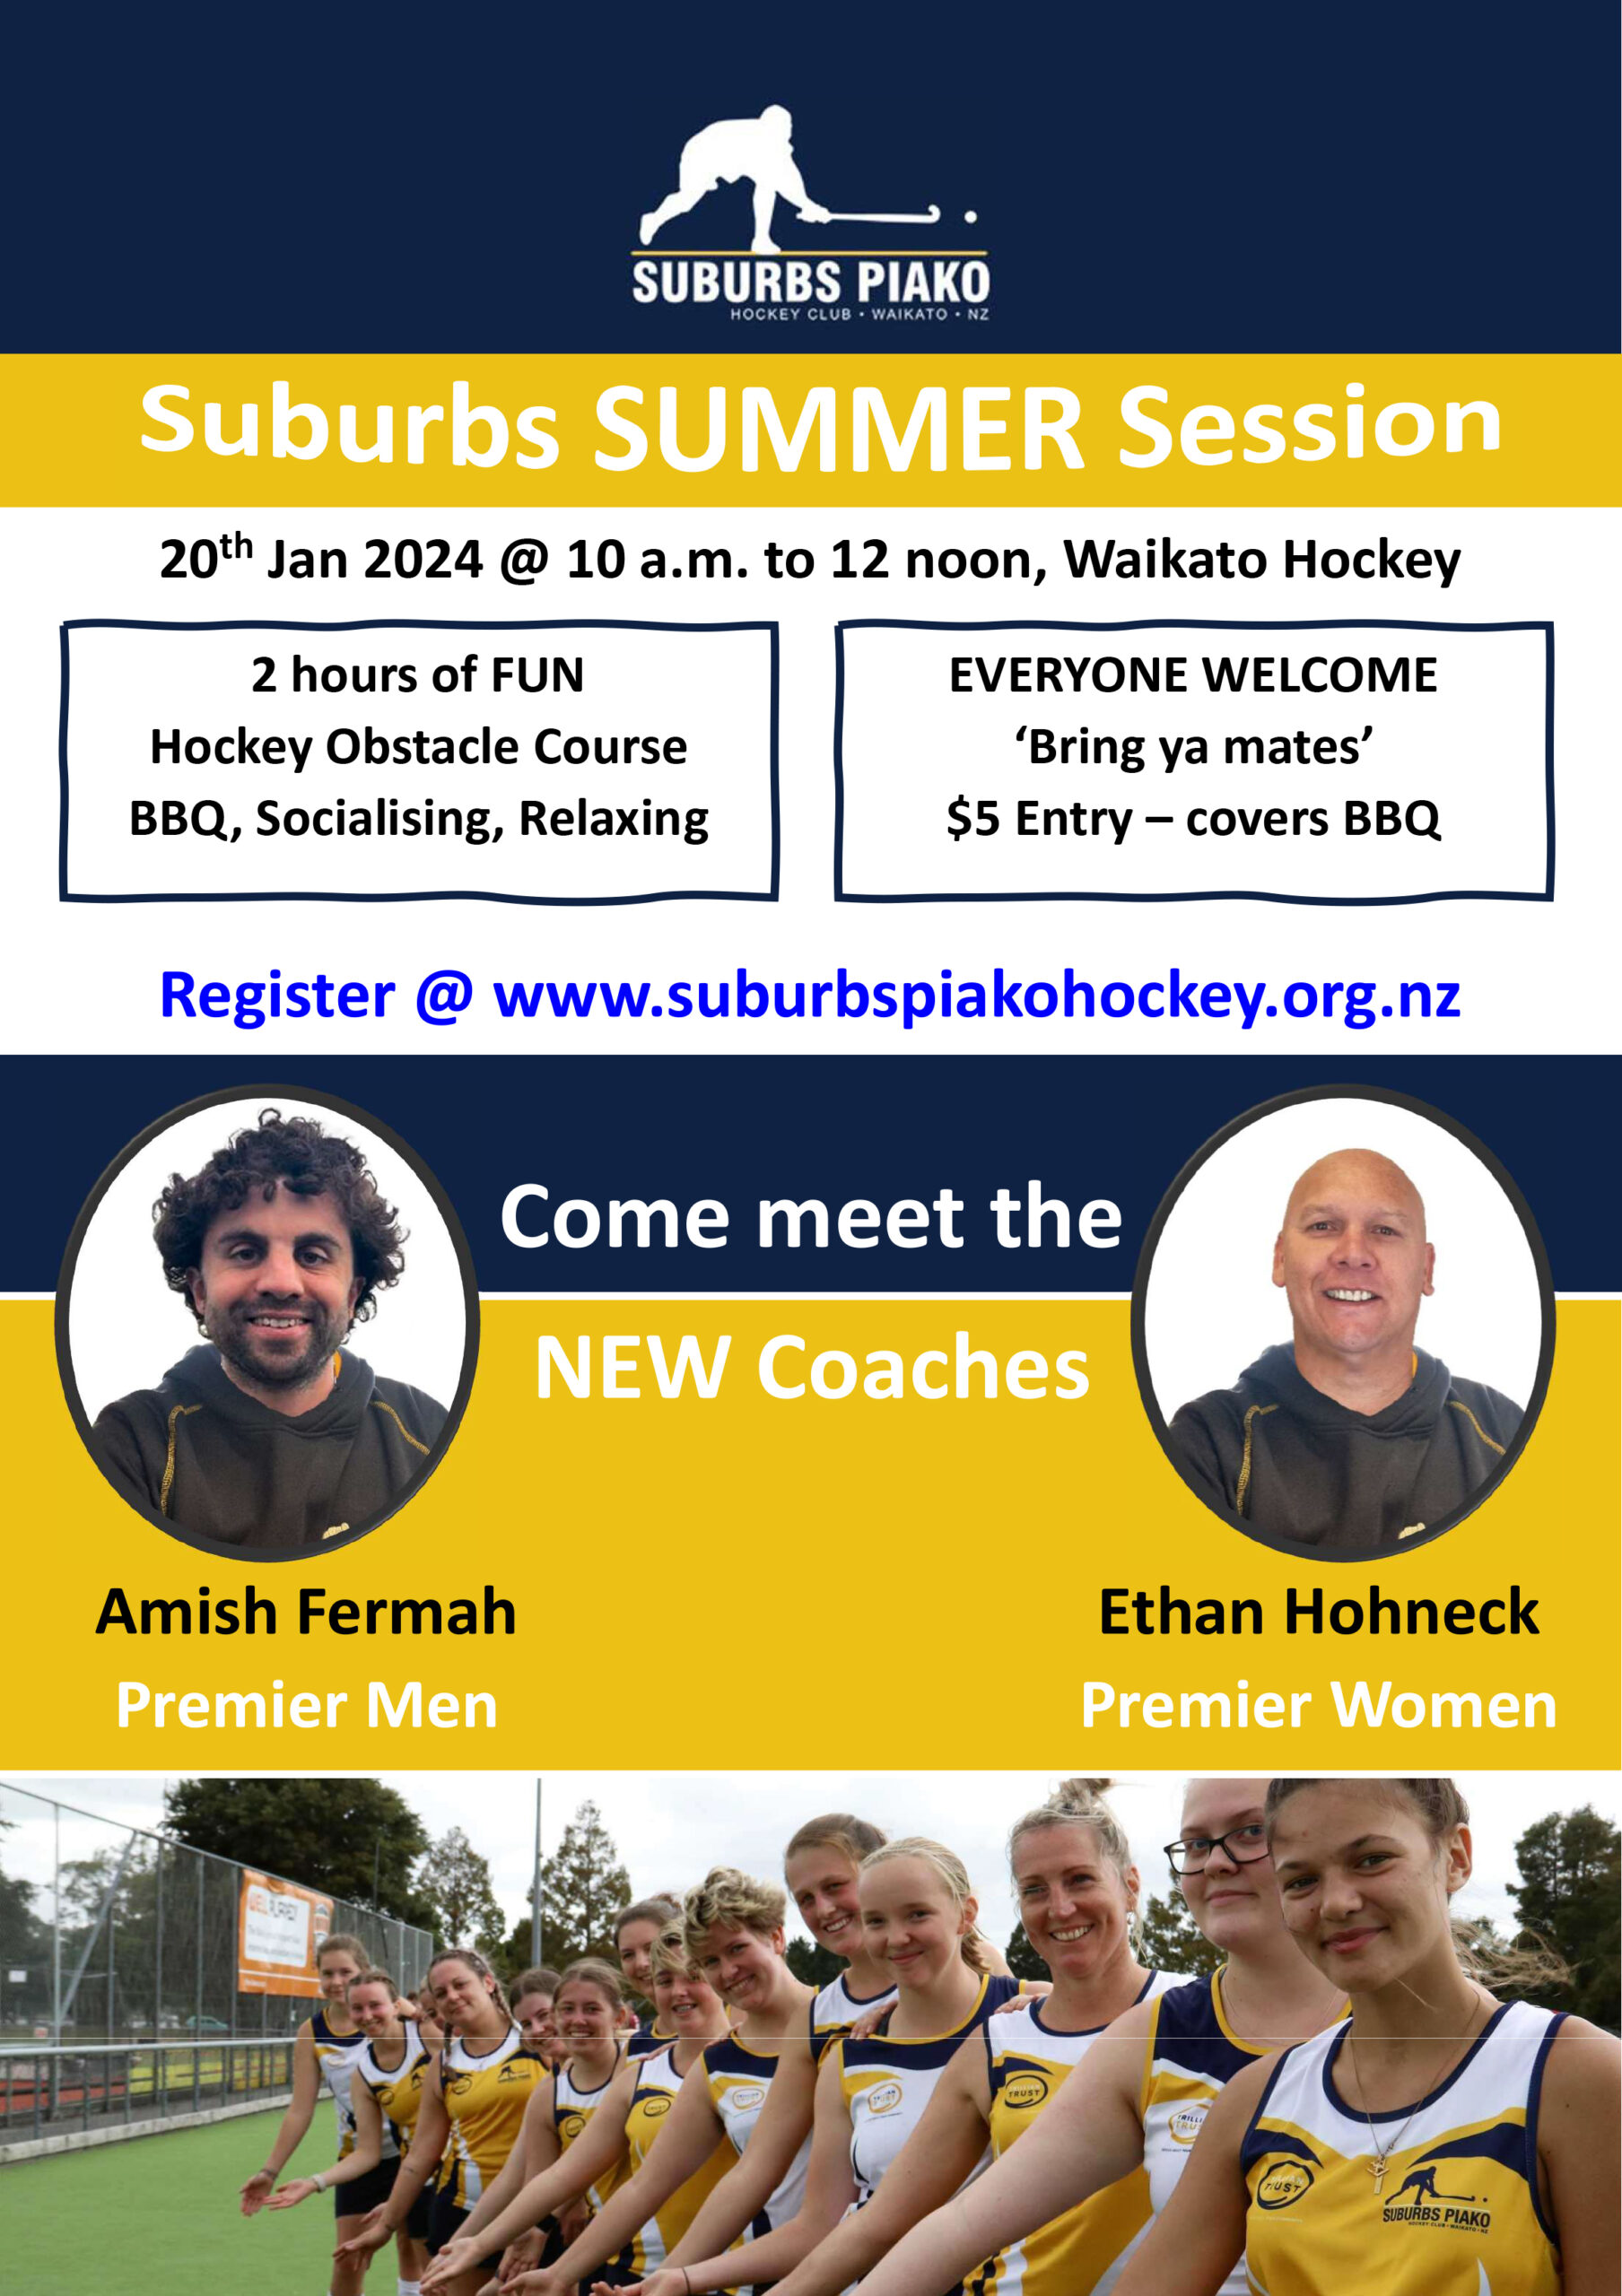 Suburbs Summer Session 2024